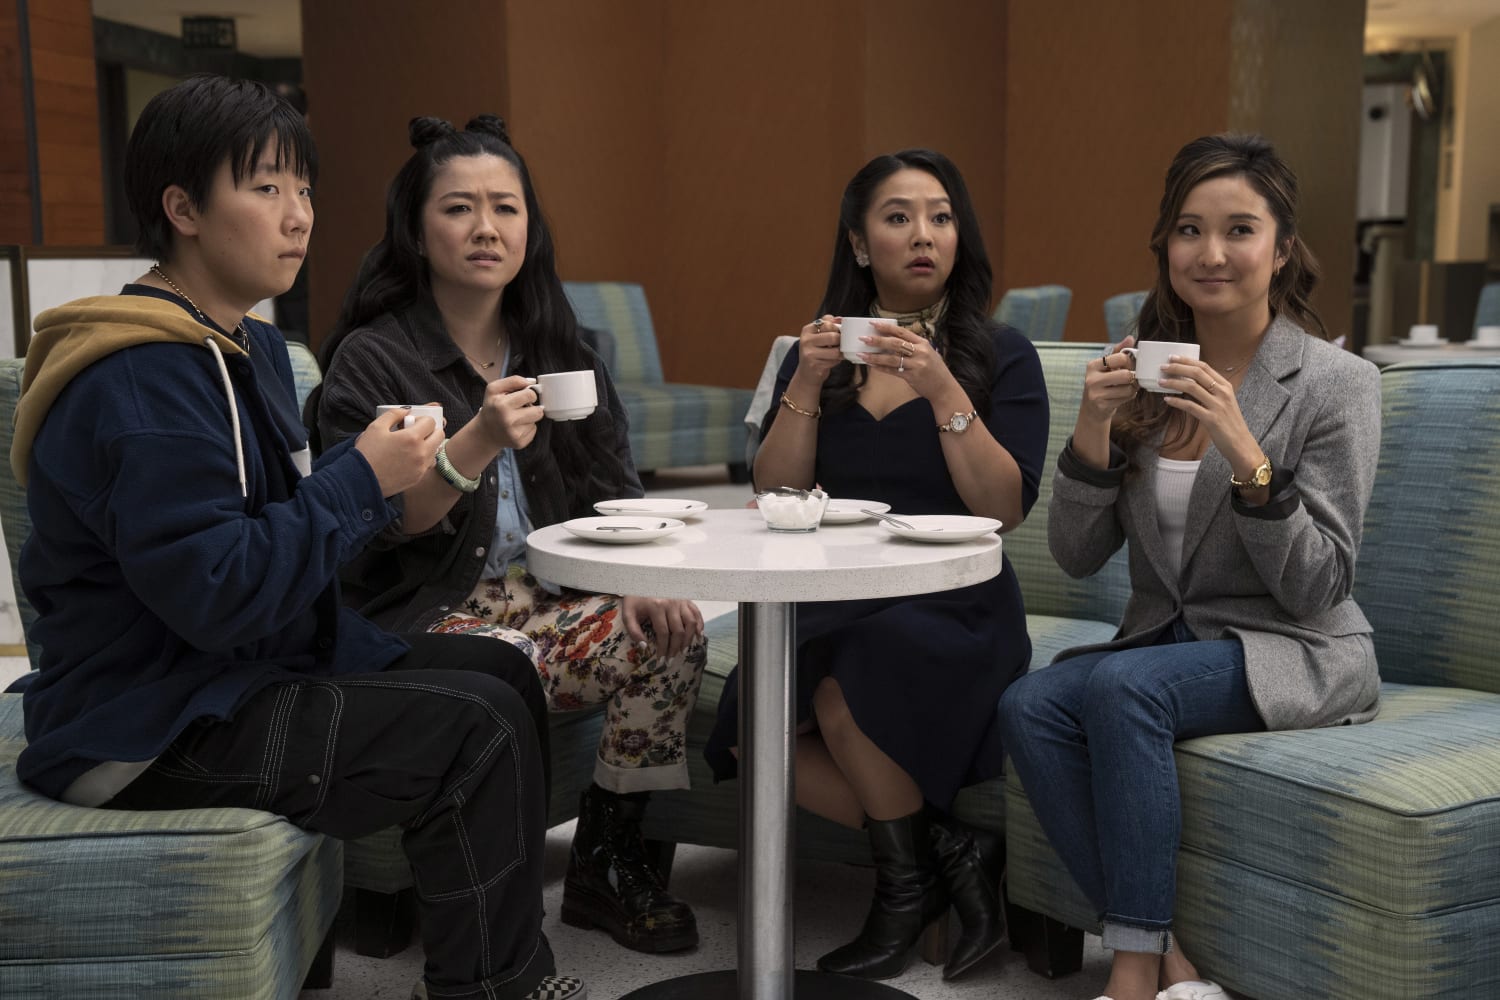 How 'Joy Ride' centers Asian women's desire in a refreshing way